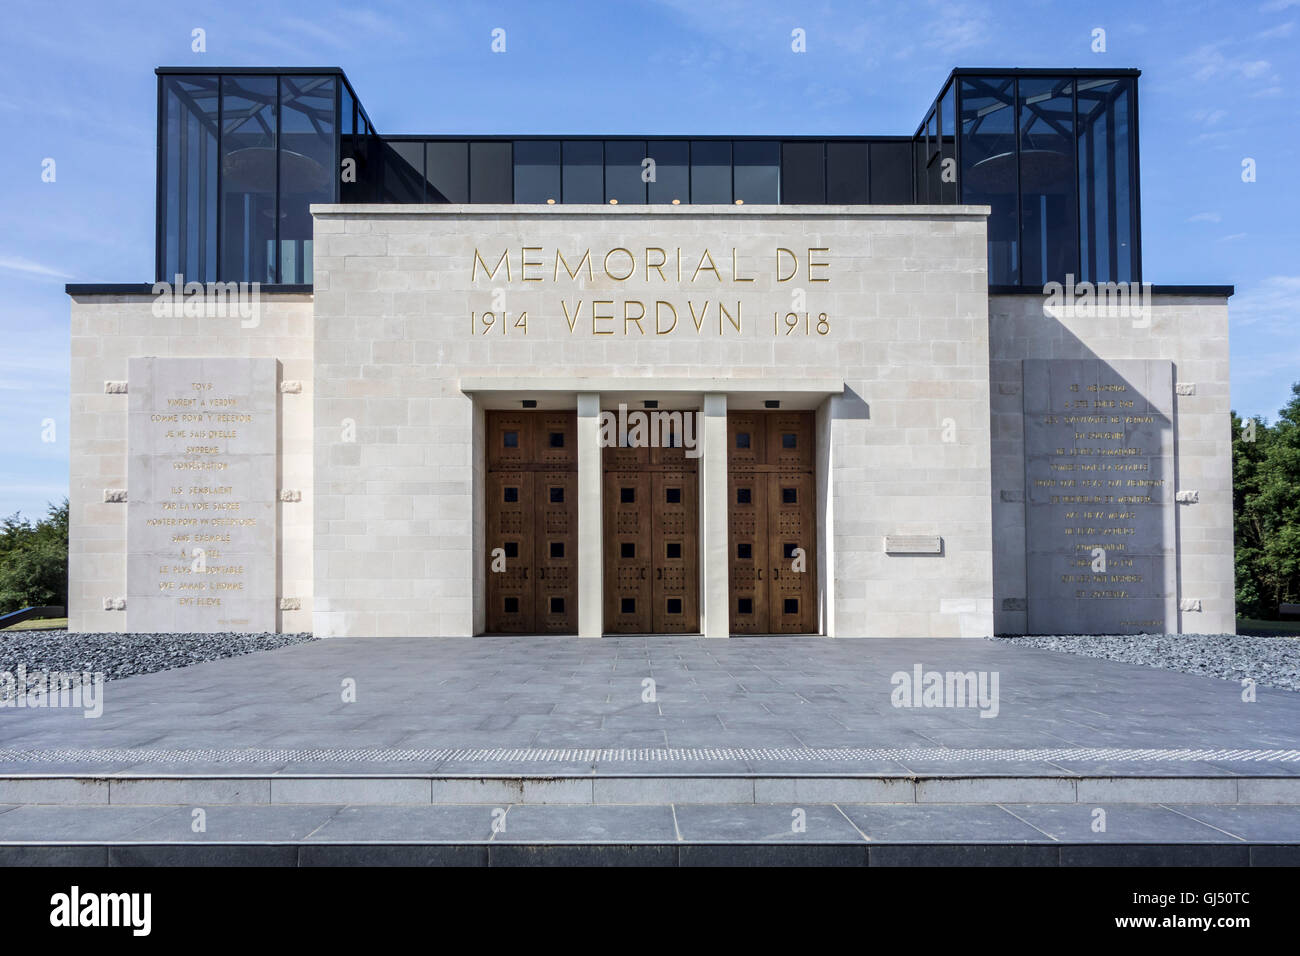 Mémorial de Verdun, museum and war memorial to commemorate the World War One 1916 Battle of Verdun, France Stock Photo